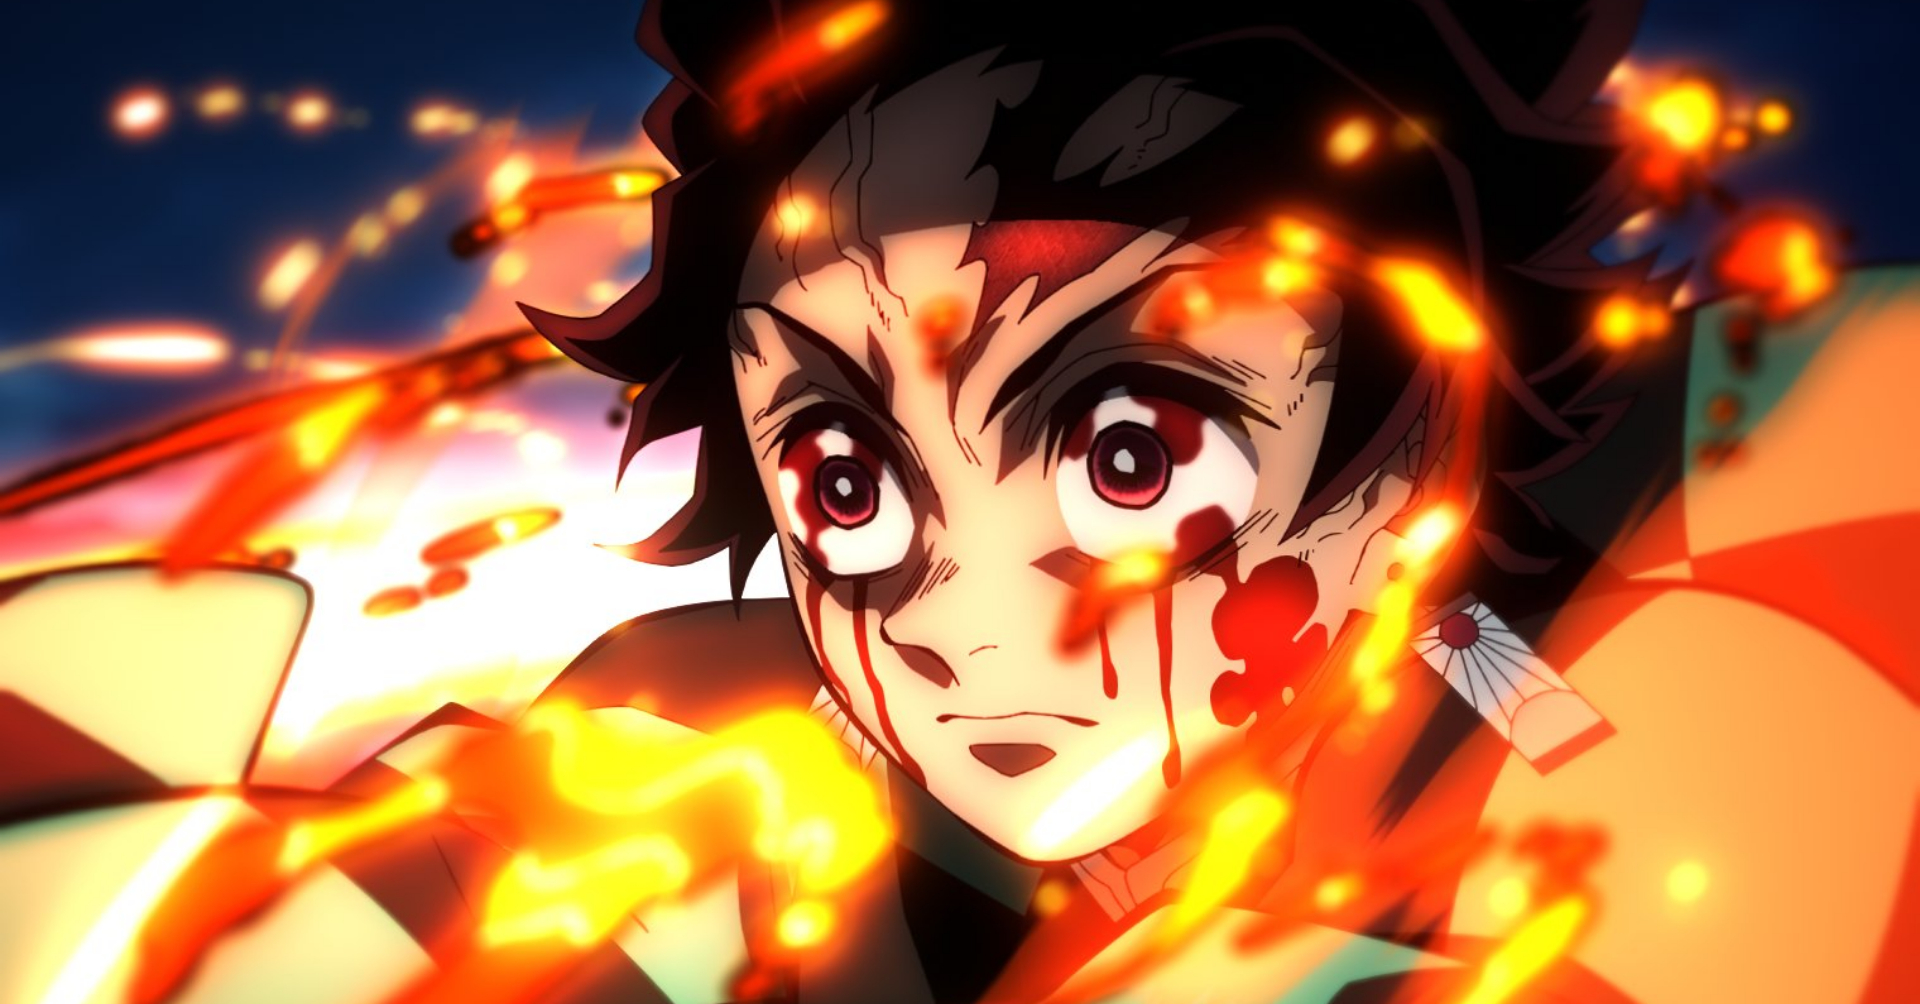 World's End Harem Episode 8 - Shouta Exacts His Revenge on Shion and Erika  - Anime Corner